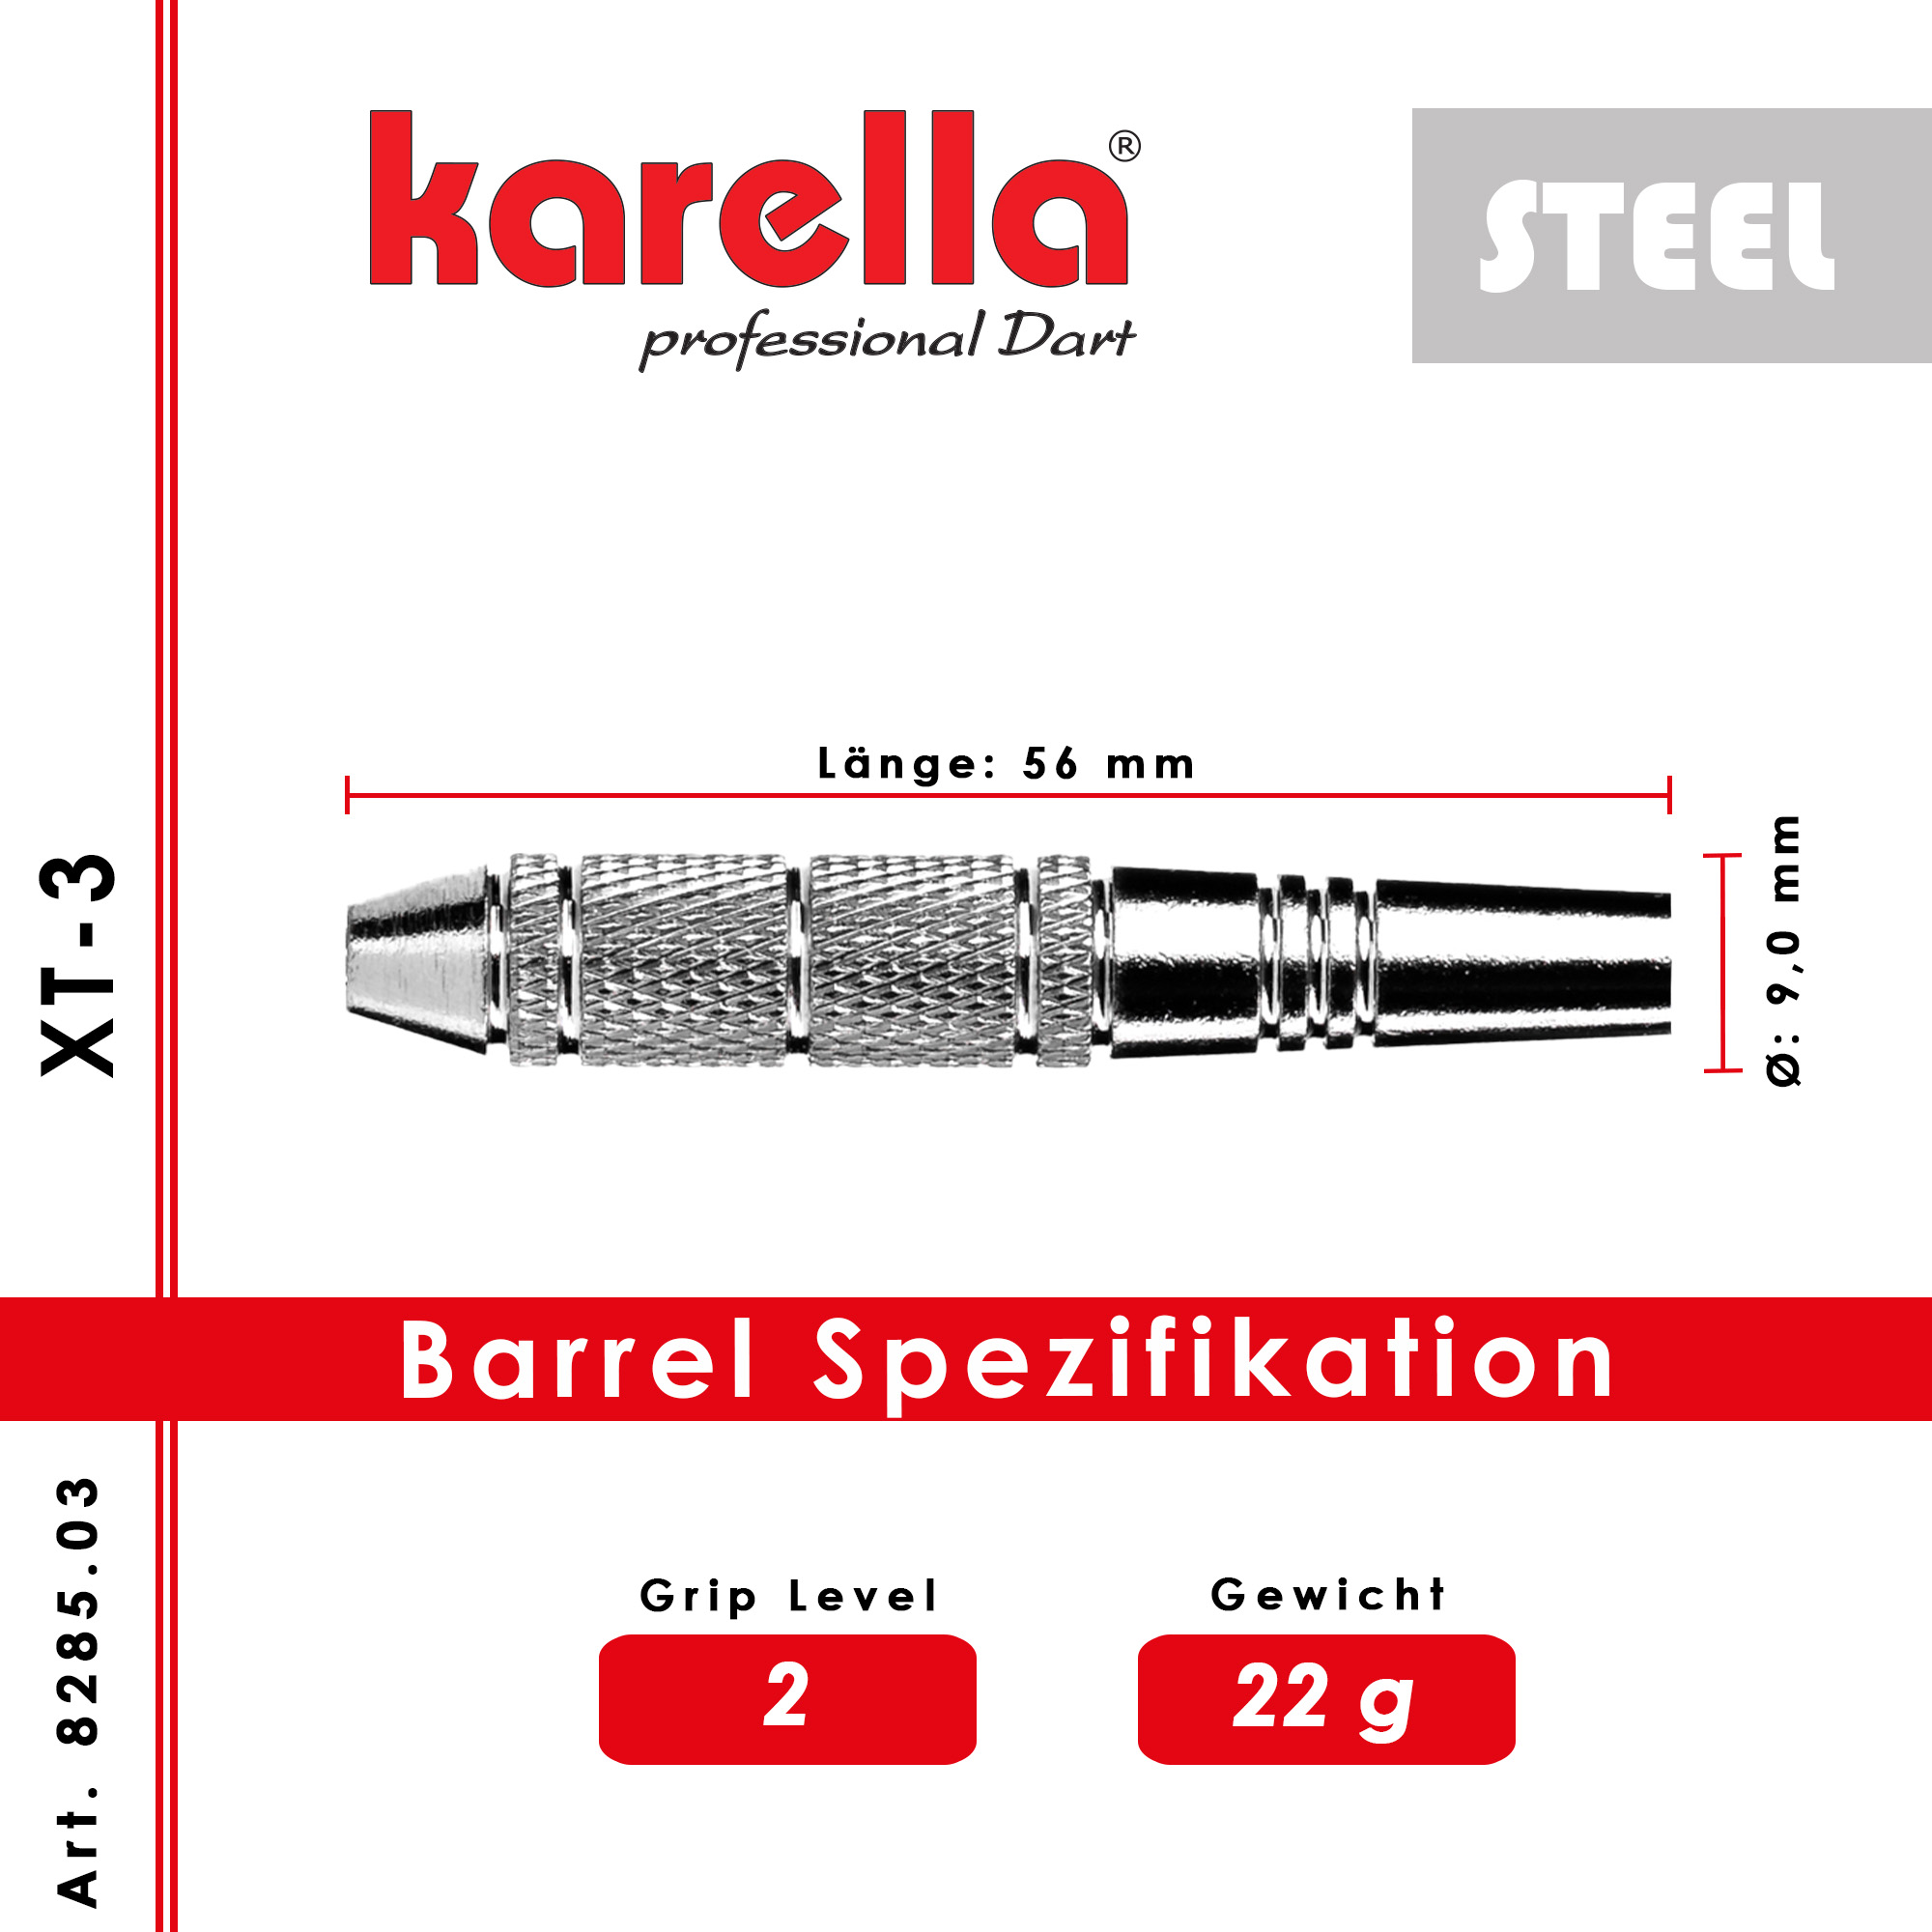 Steel dart Karella XT-3 22g